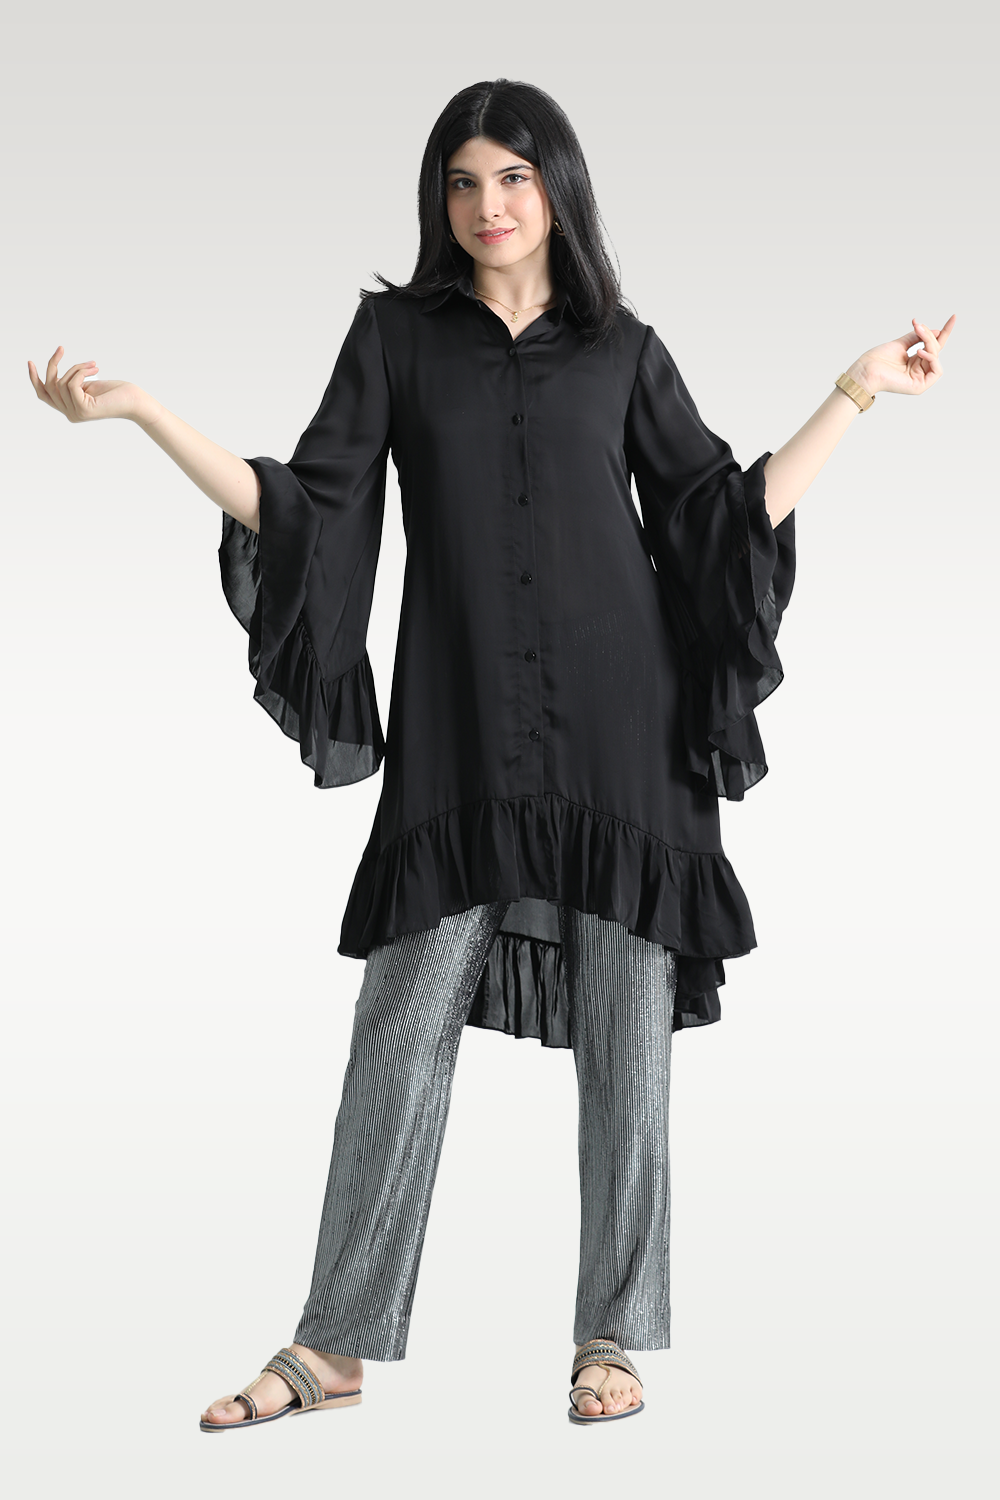 Alish Black Kurti with Designer Sleeve and Grey Pant